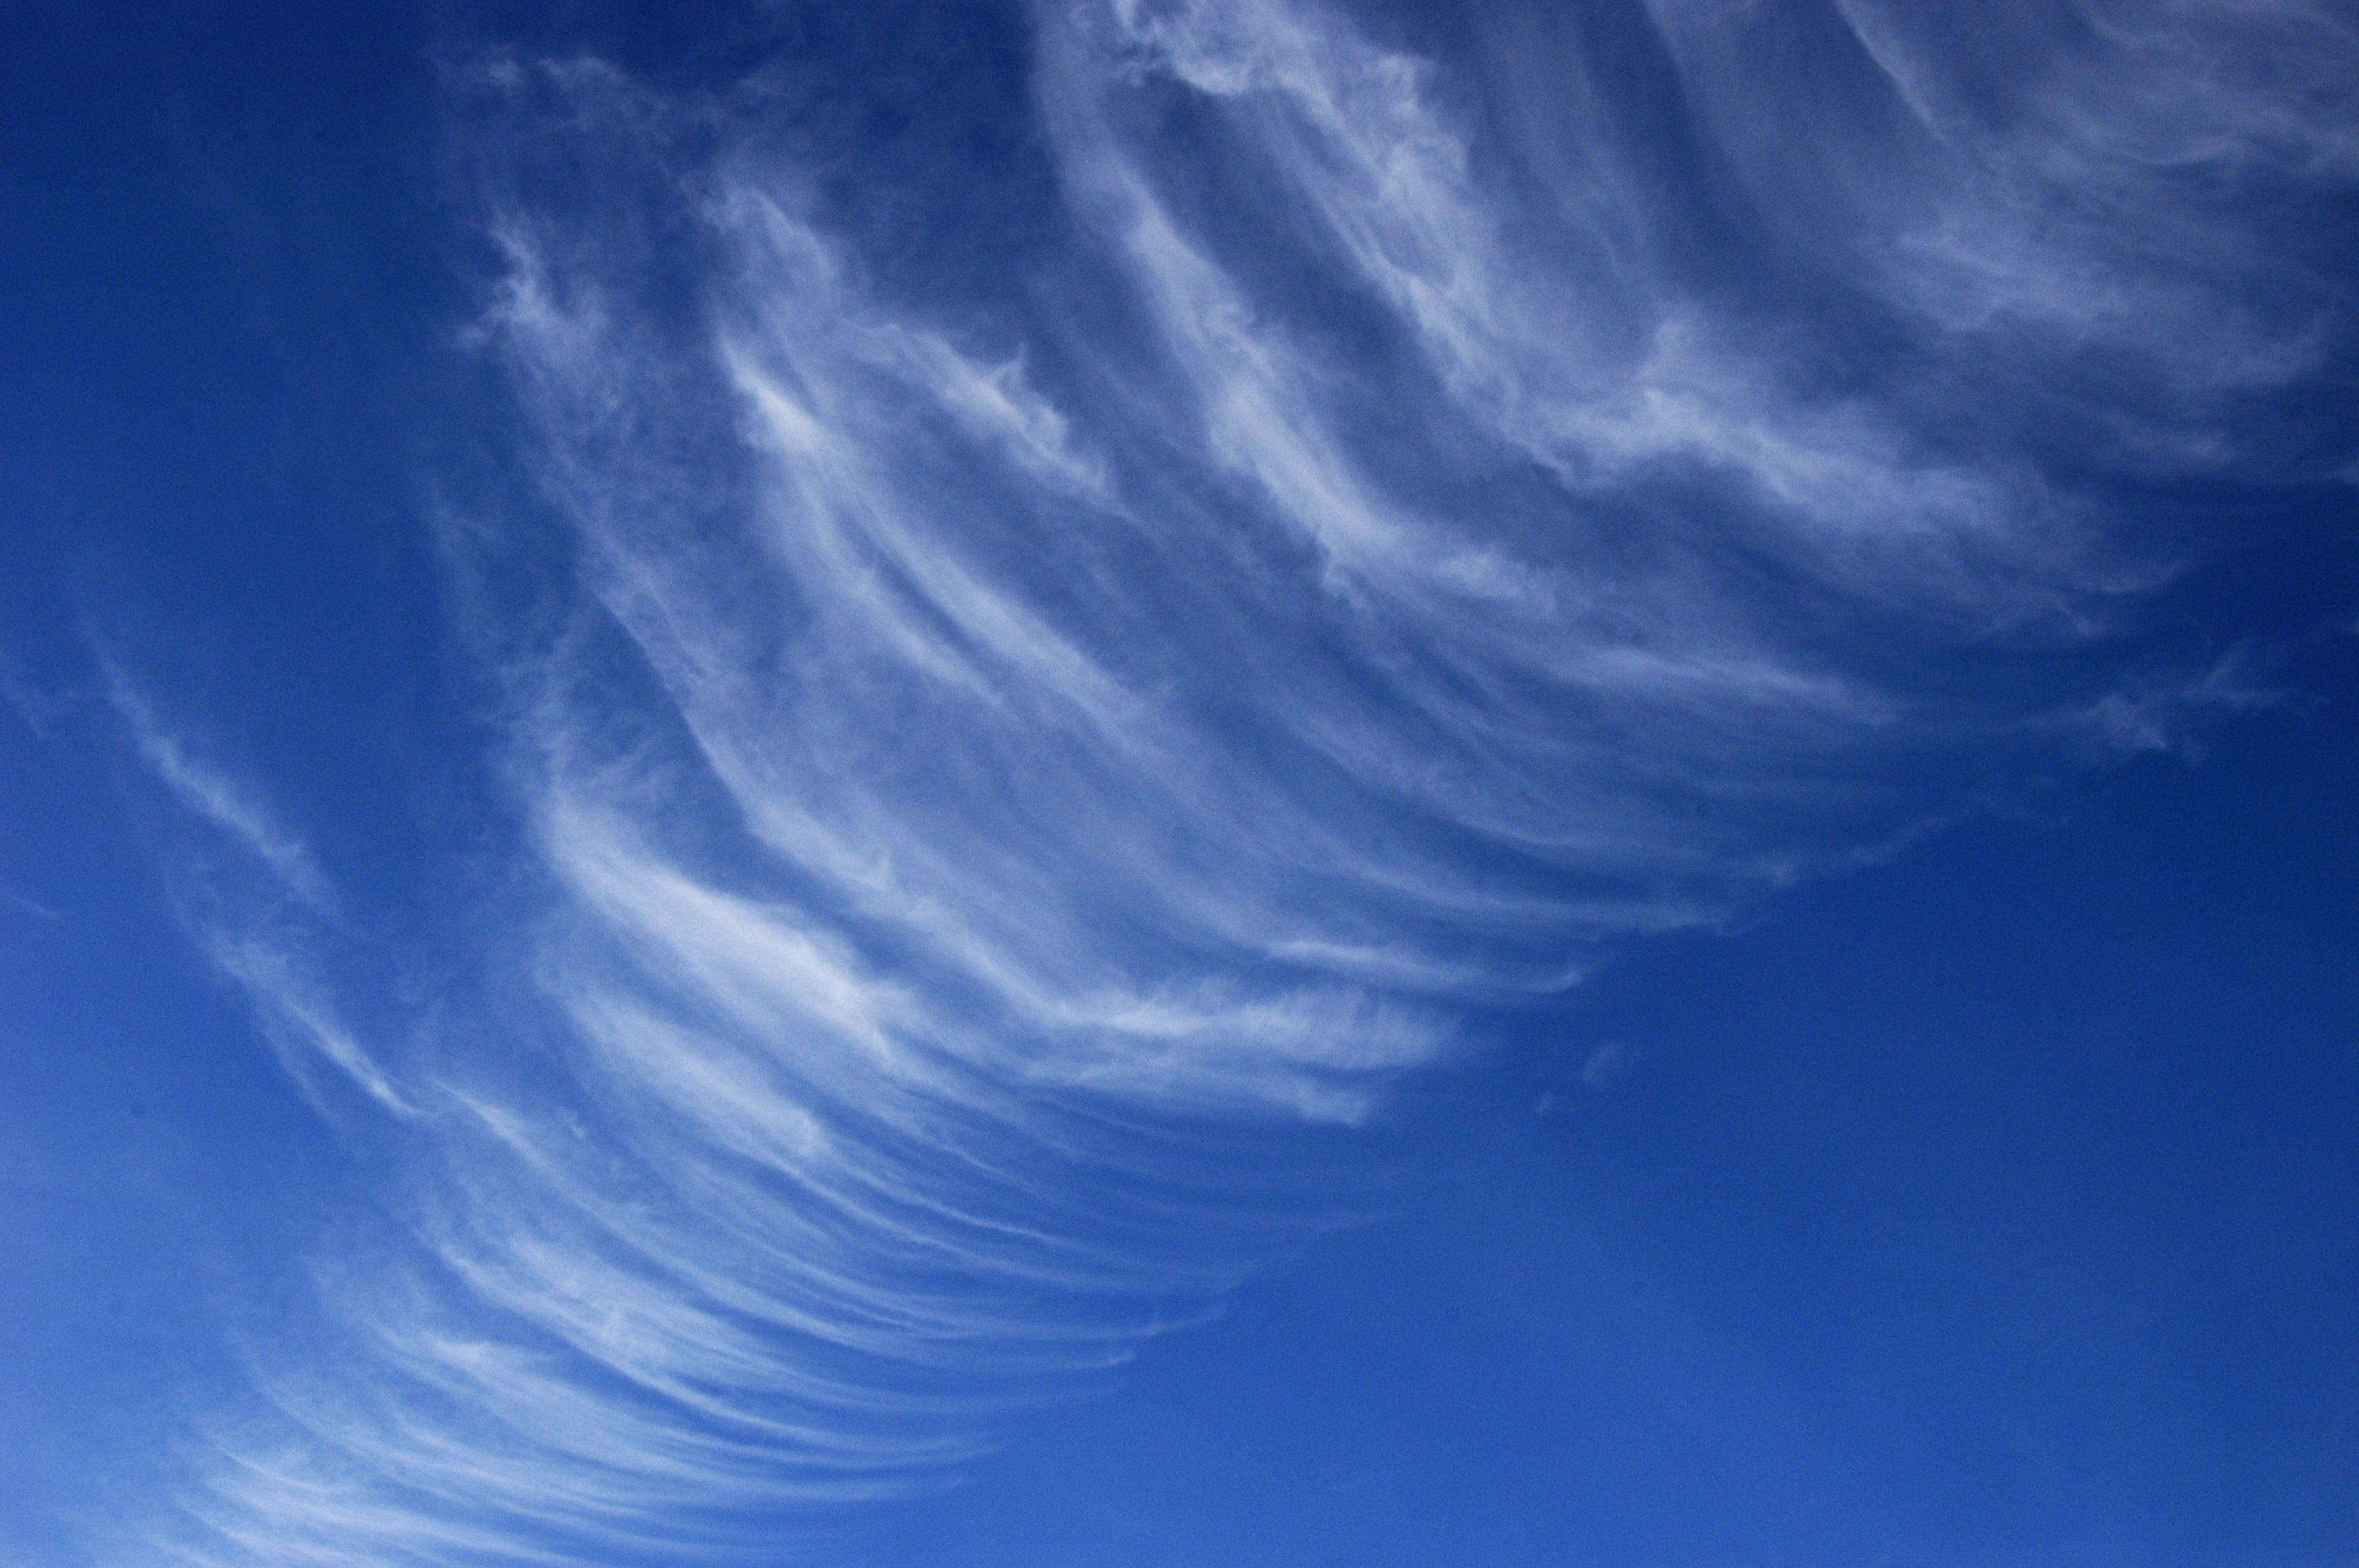 Image of cirrus clouds